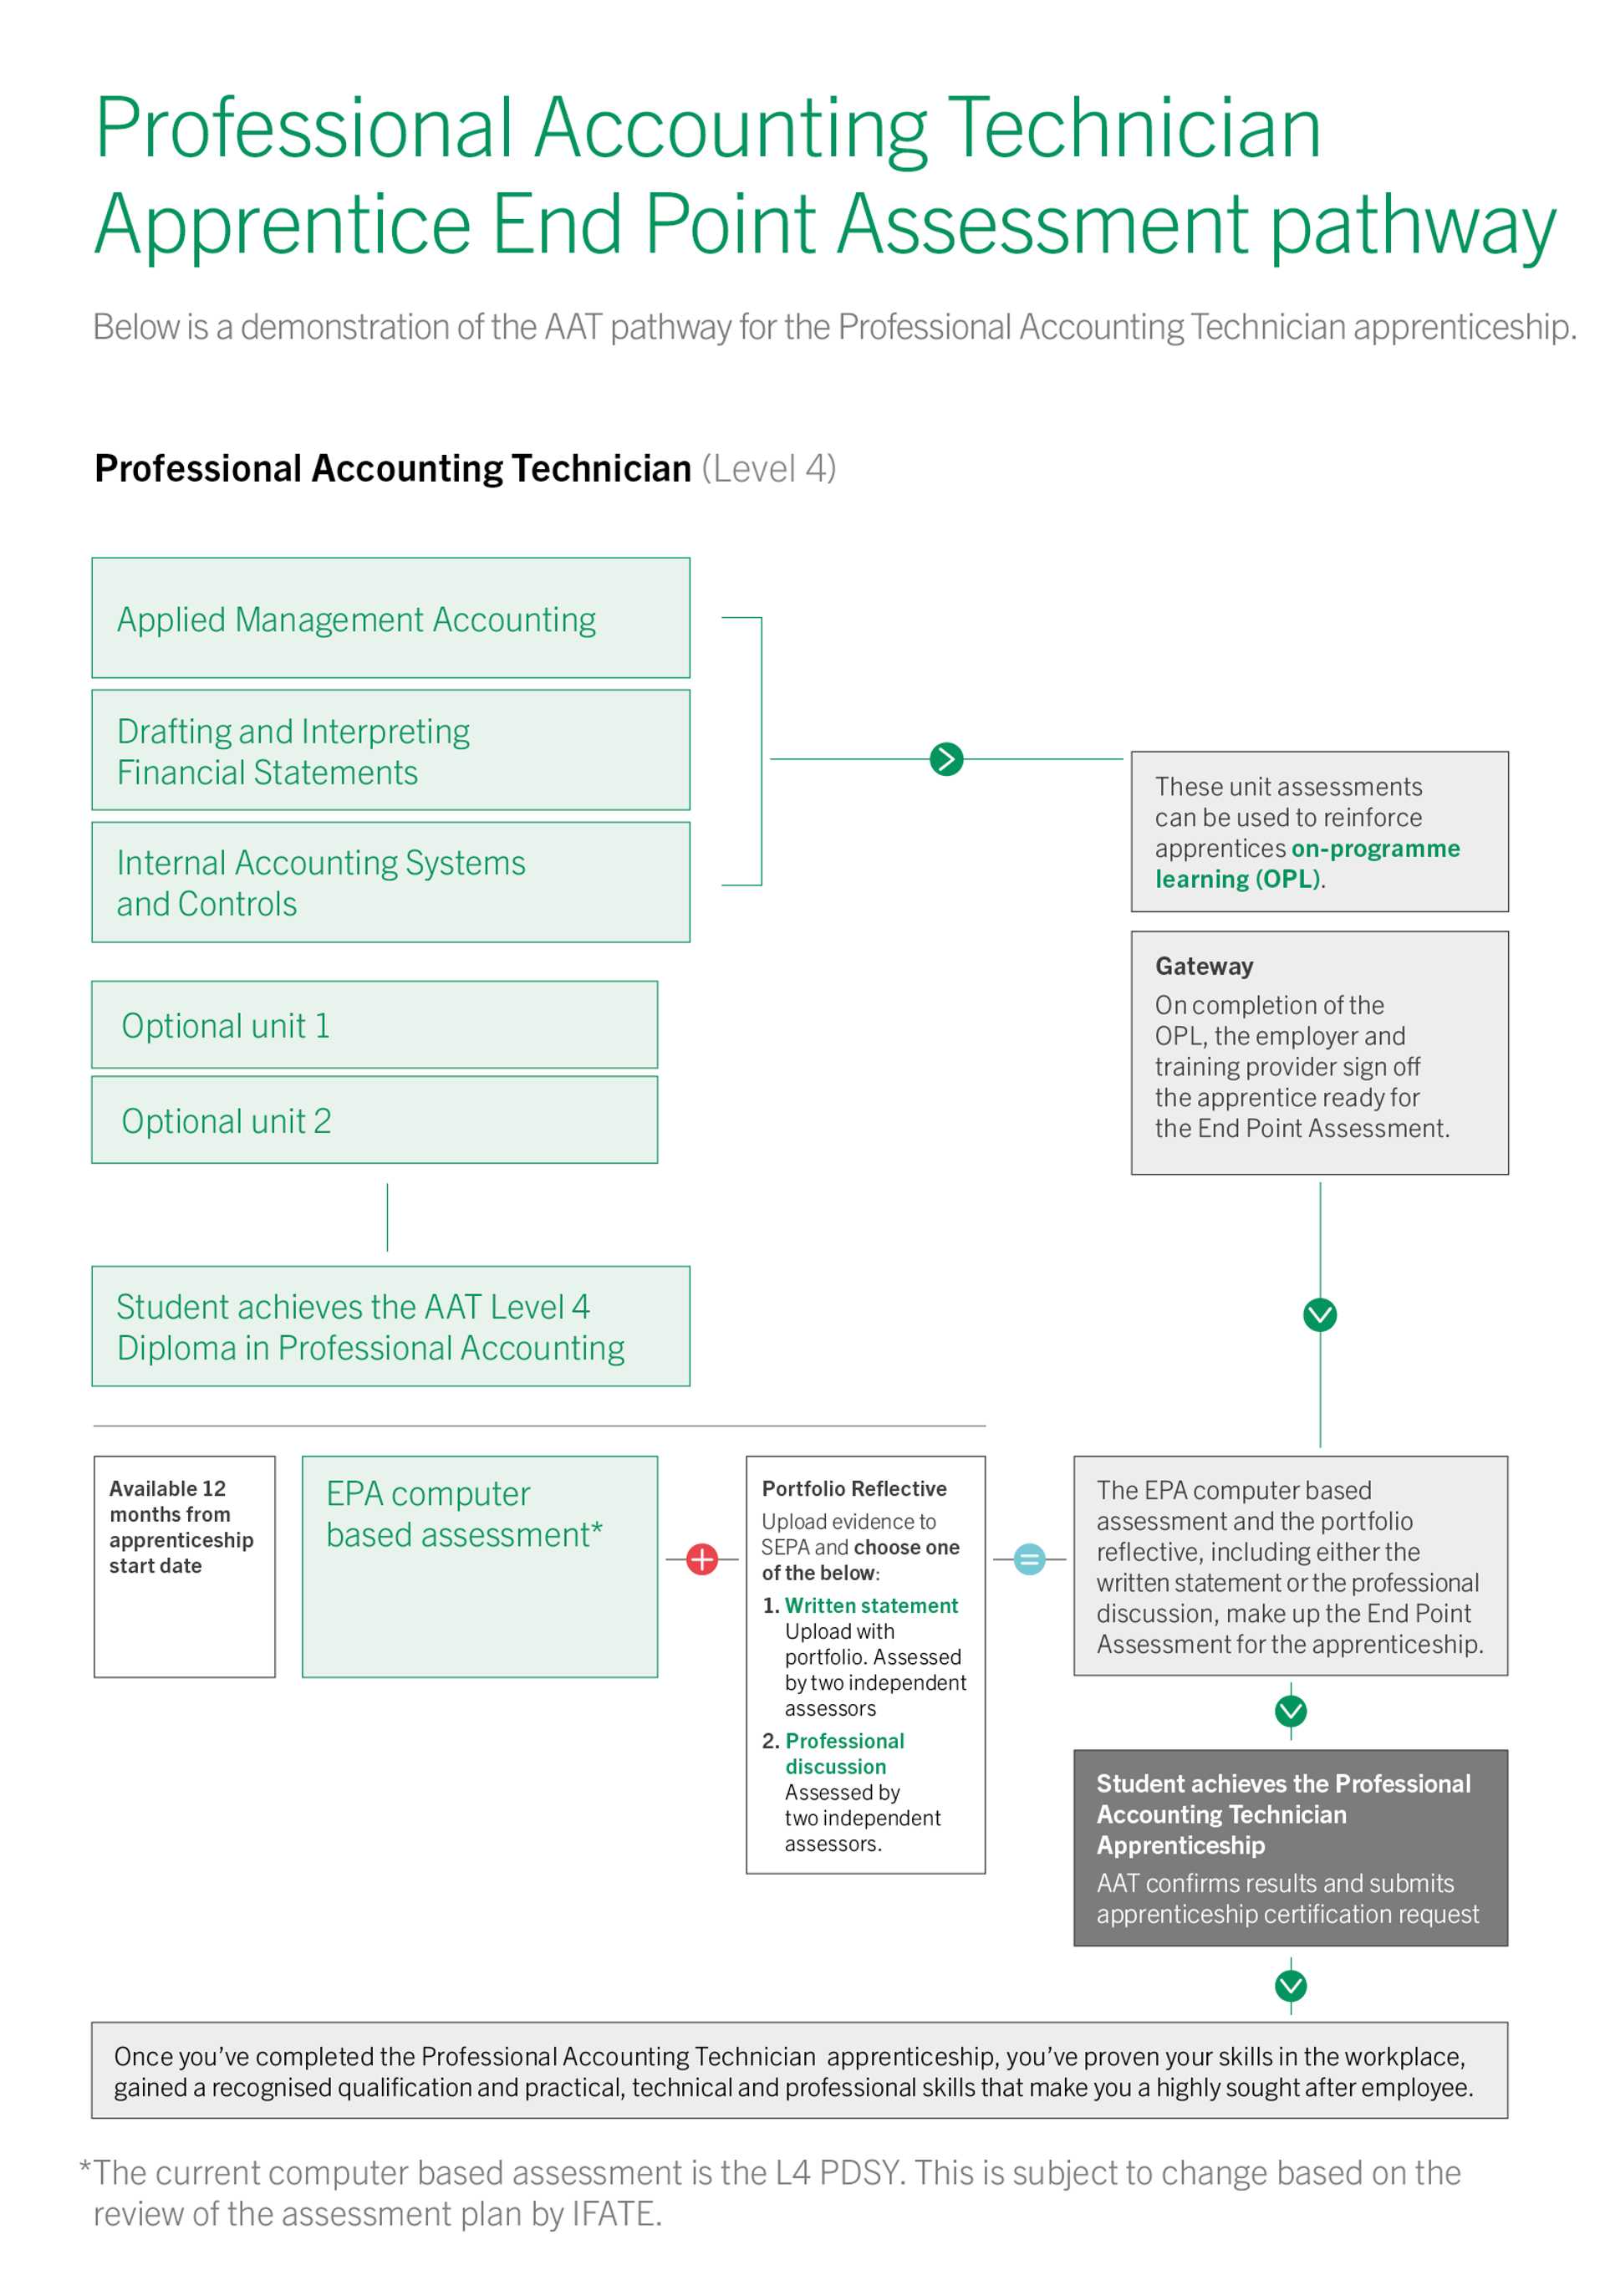 Professional Accounting Technician apprenticeship EPA pathway